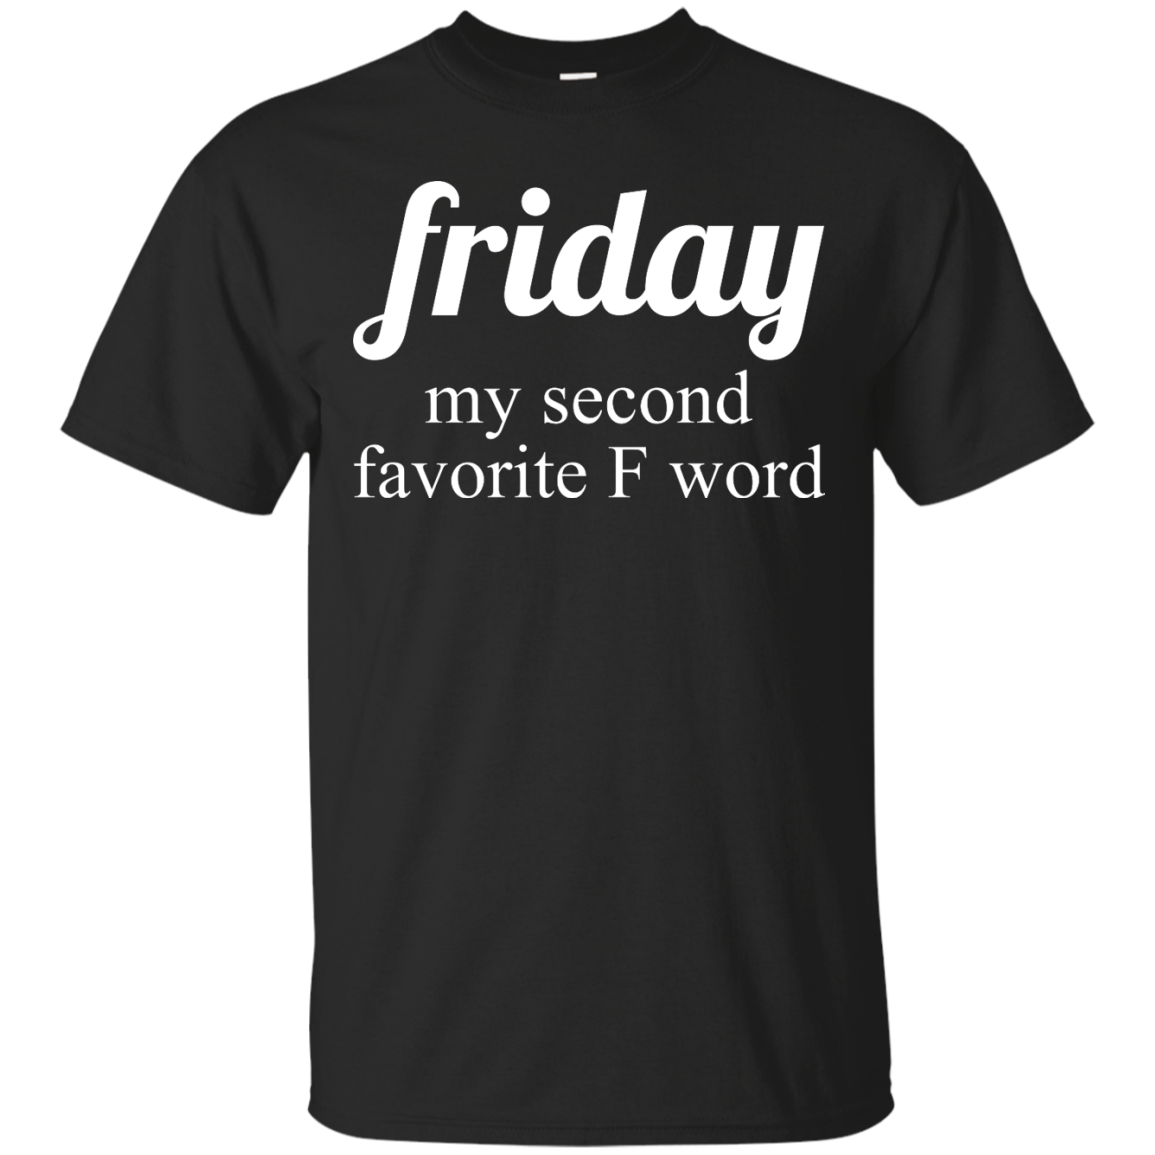 Friday my second favorite f word t-shirt, racerback, tank